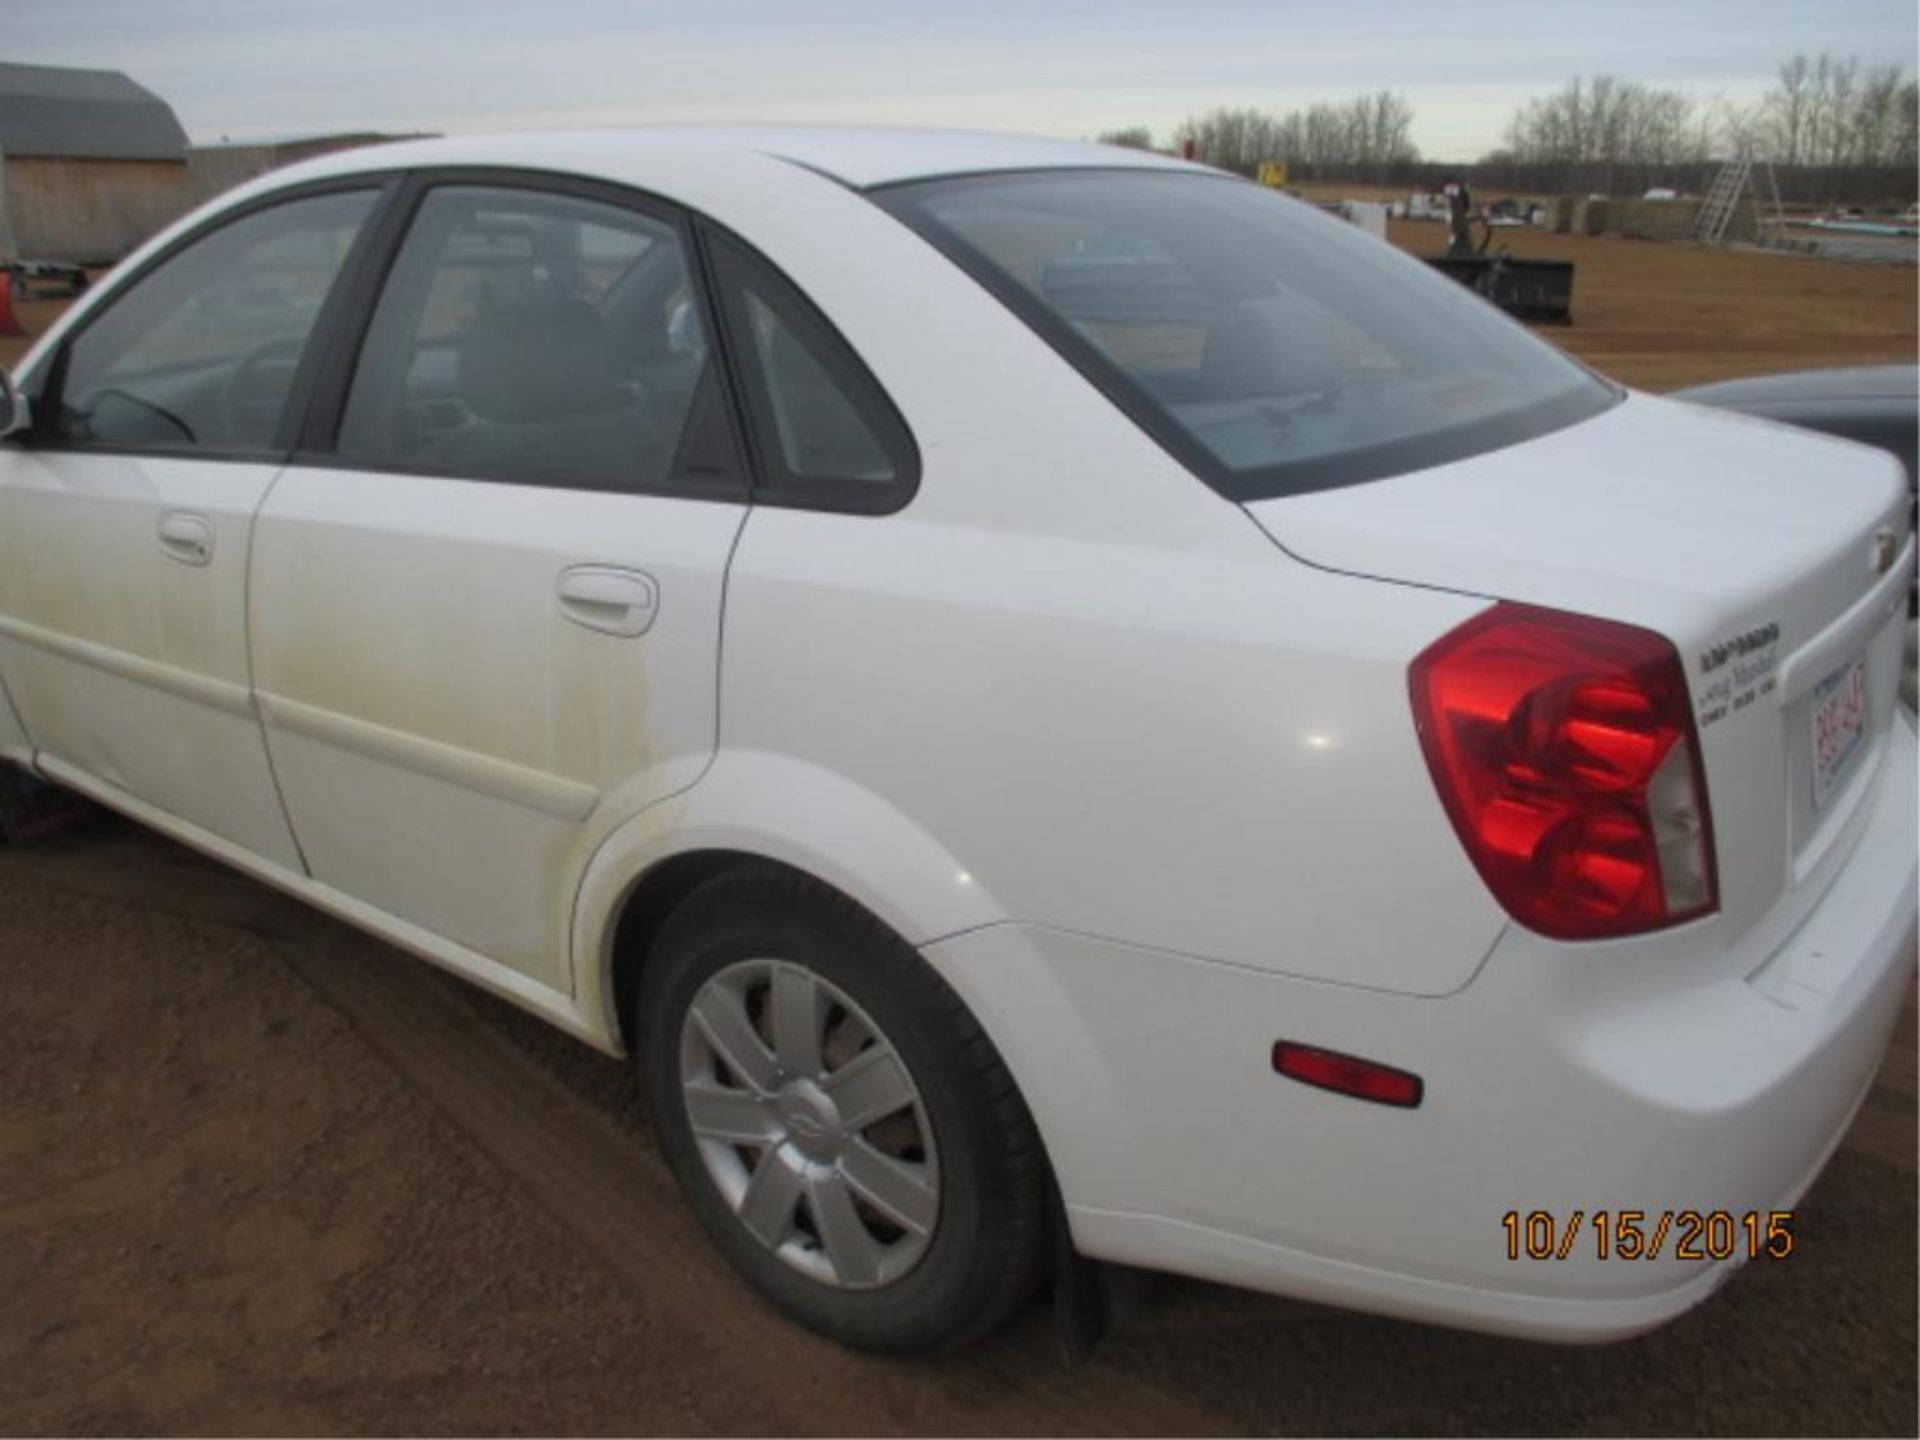 2004 Optra Chevrolet 4-Door Car White, VIN KL1JD527X4K950837 194,403 kms - Image 3 of 3